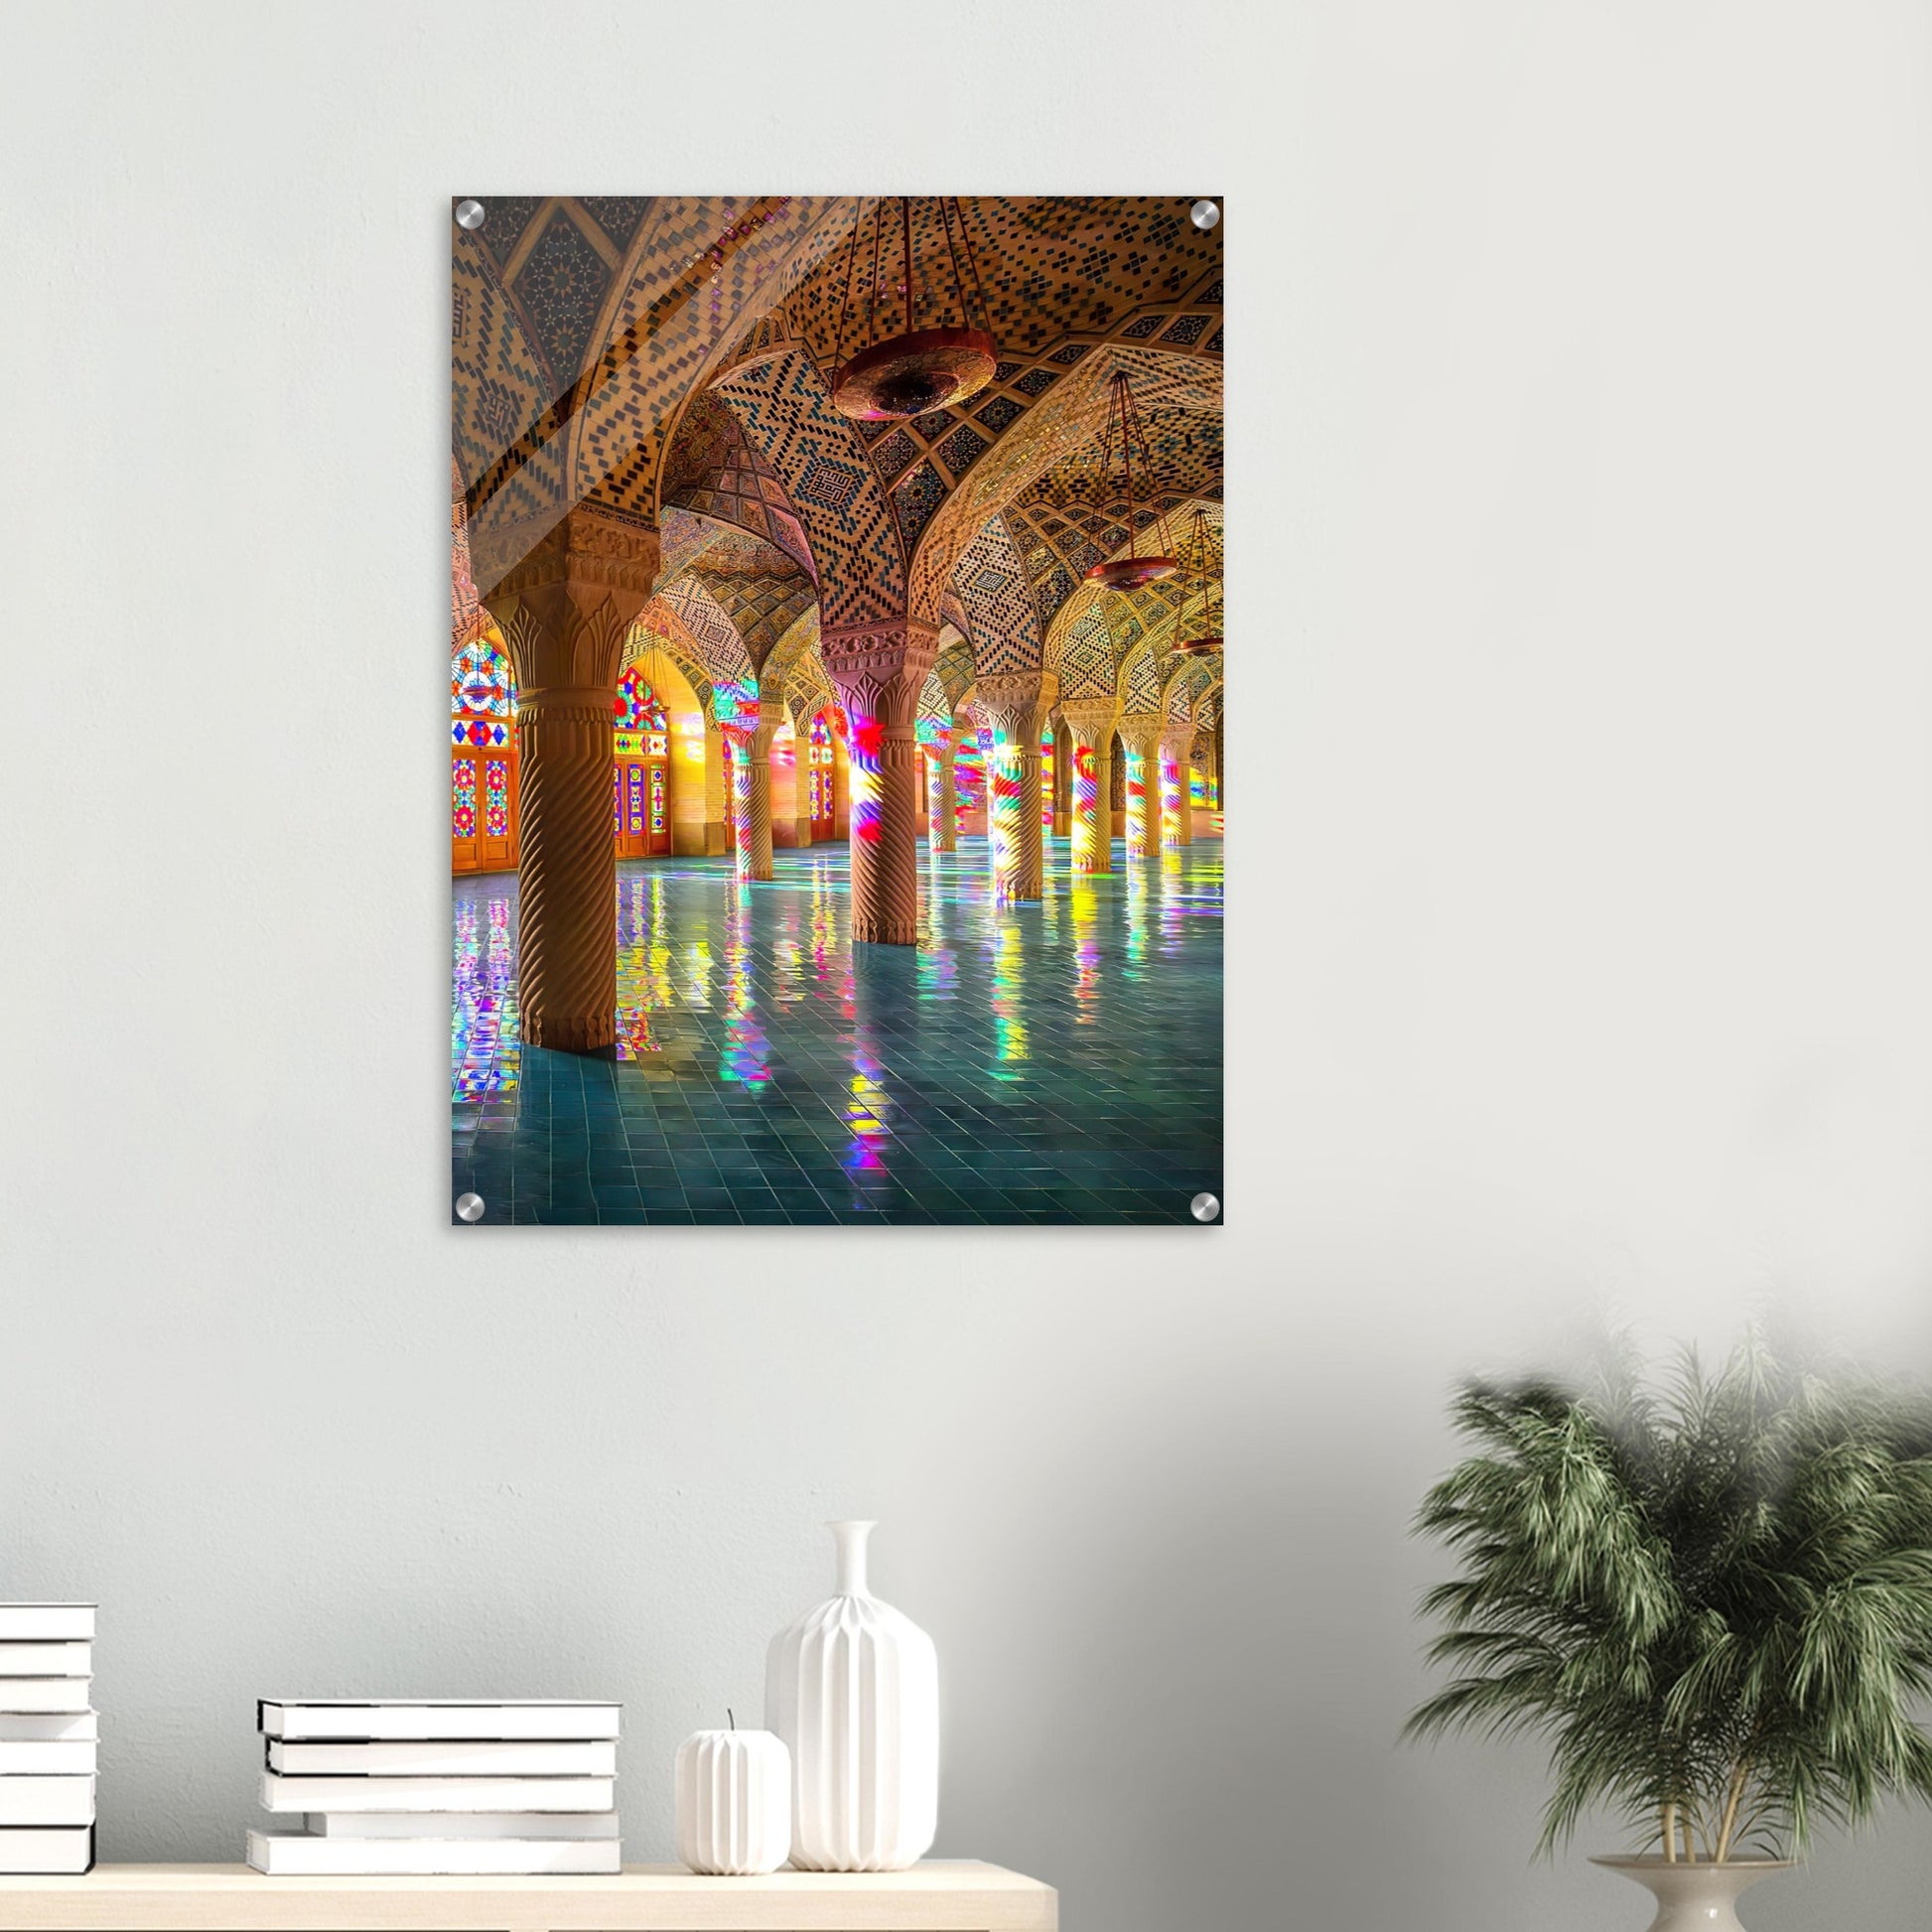 Acrylic HQ Photo Print of Shah Cheragh, Shiraz  Mosque in Iran - Posterify